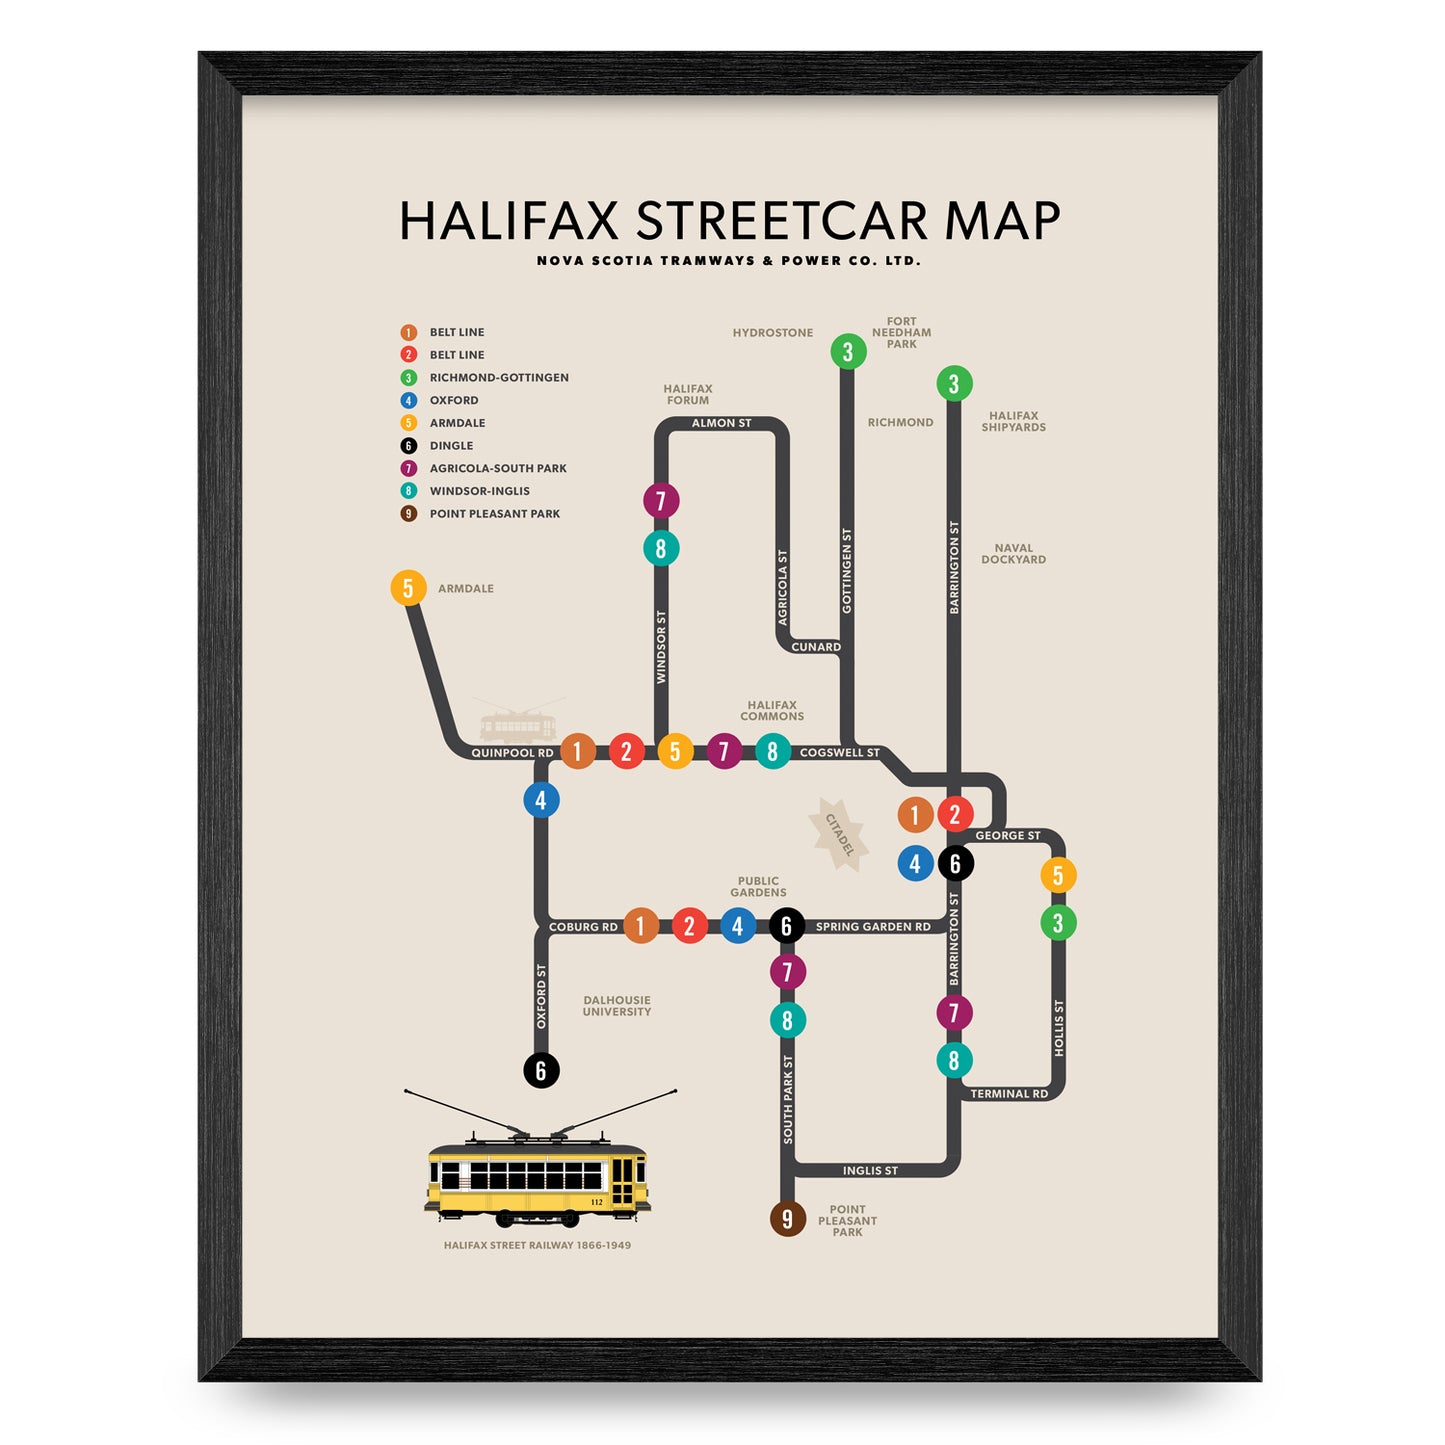 Halifax Streetcar Map Giclée 11x14 Print